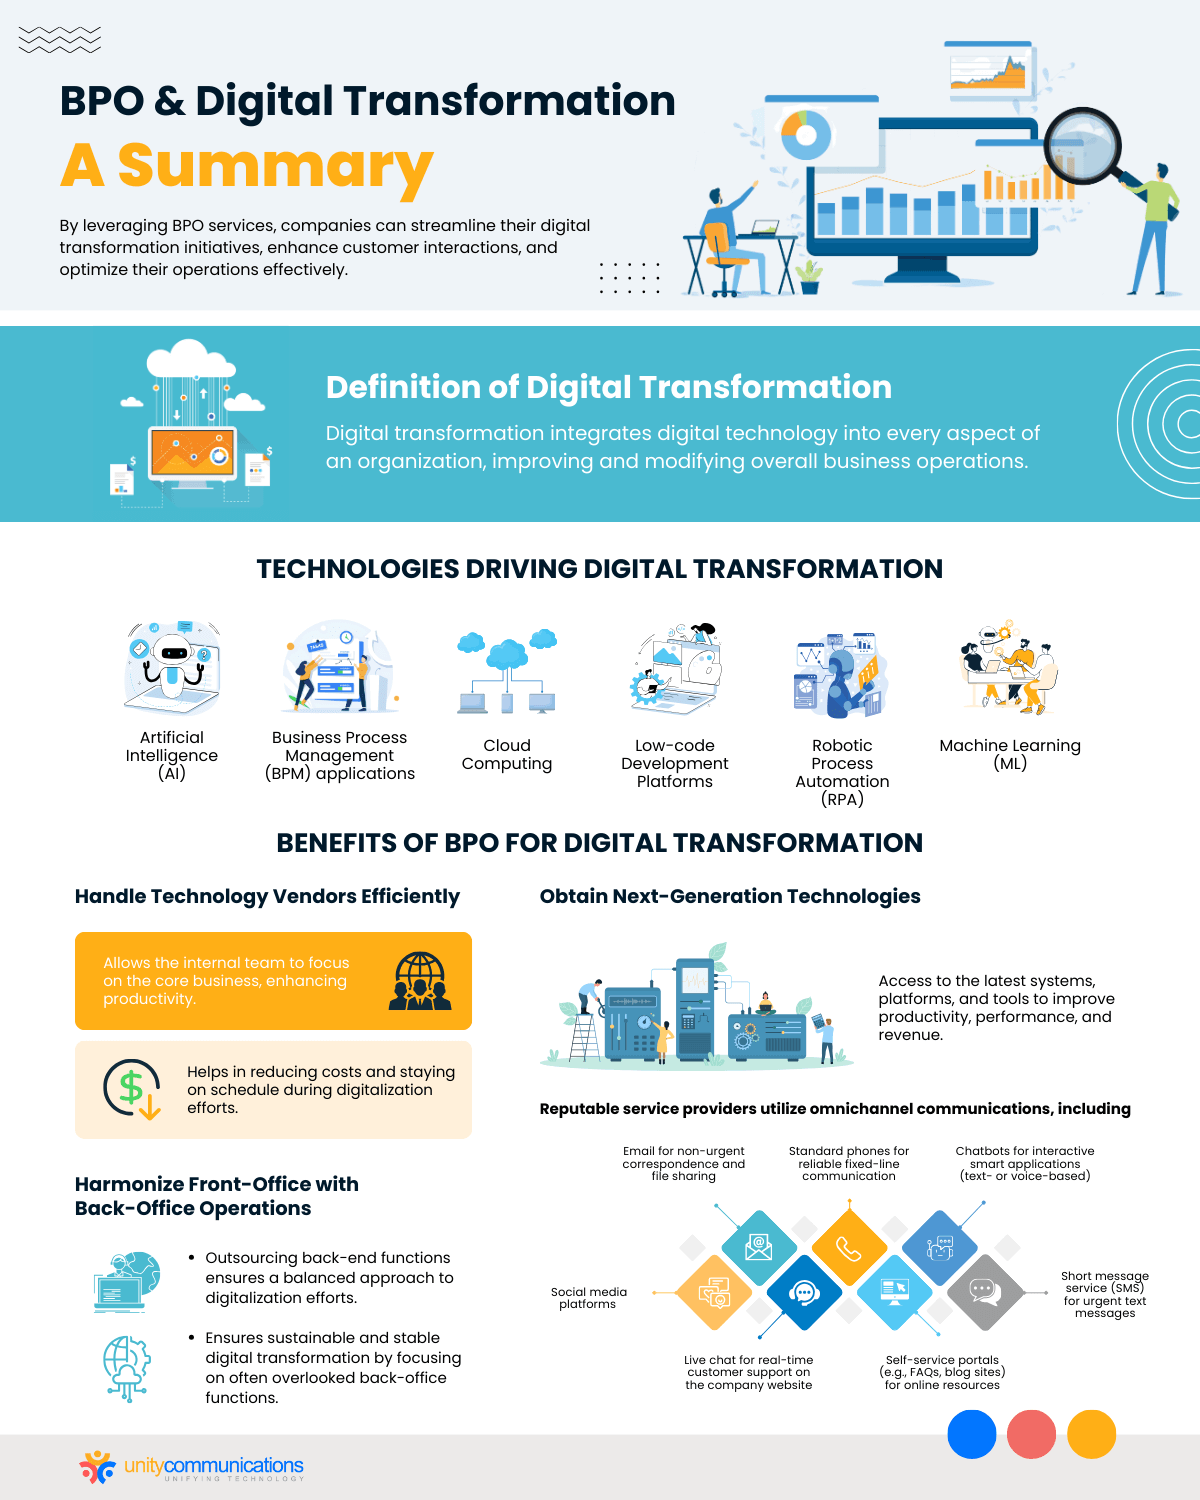 BPO and Digital Transformation - A Summary